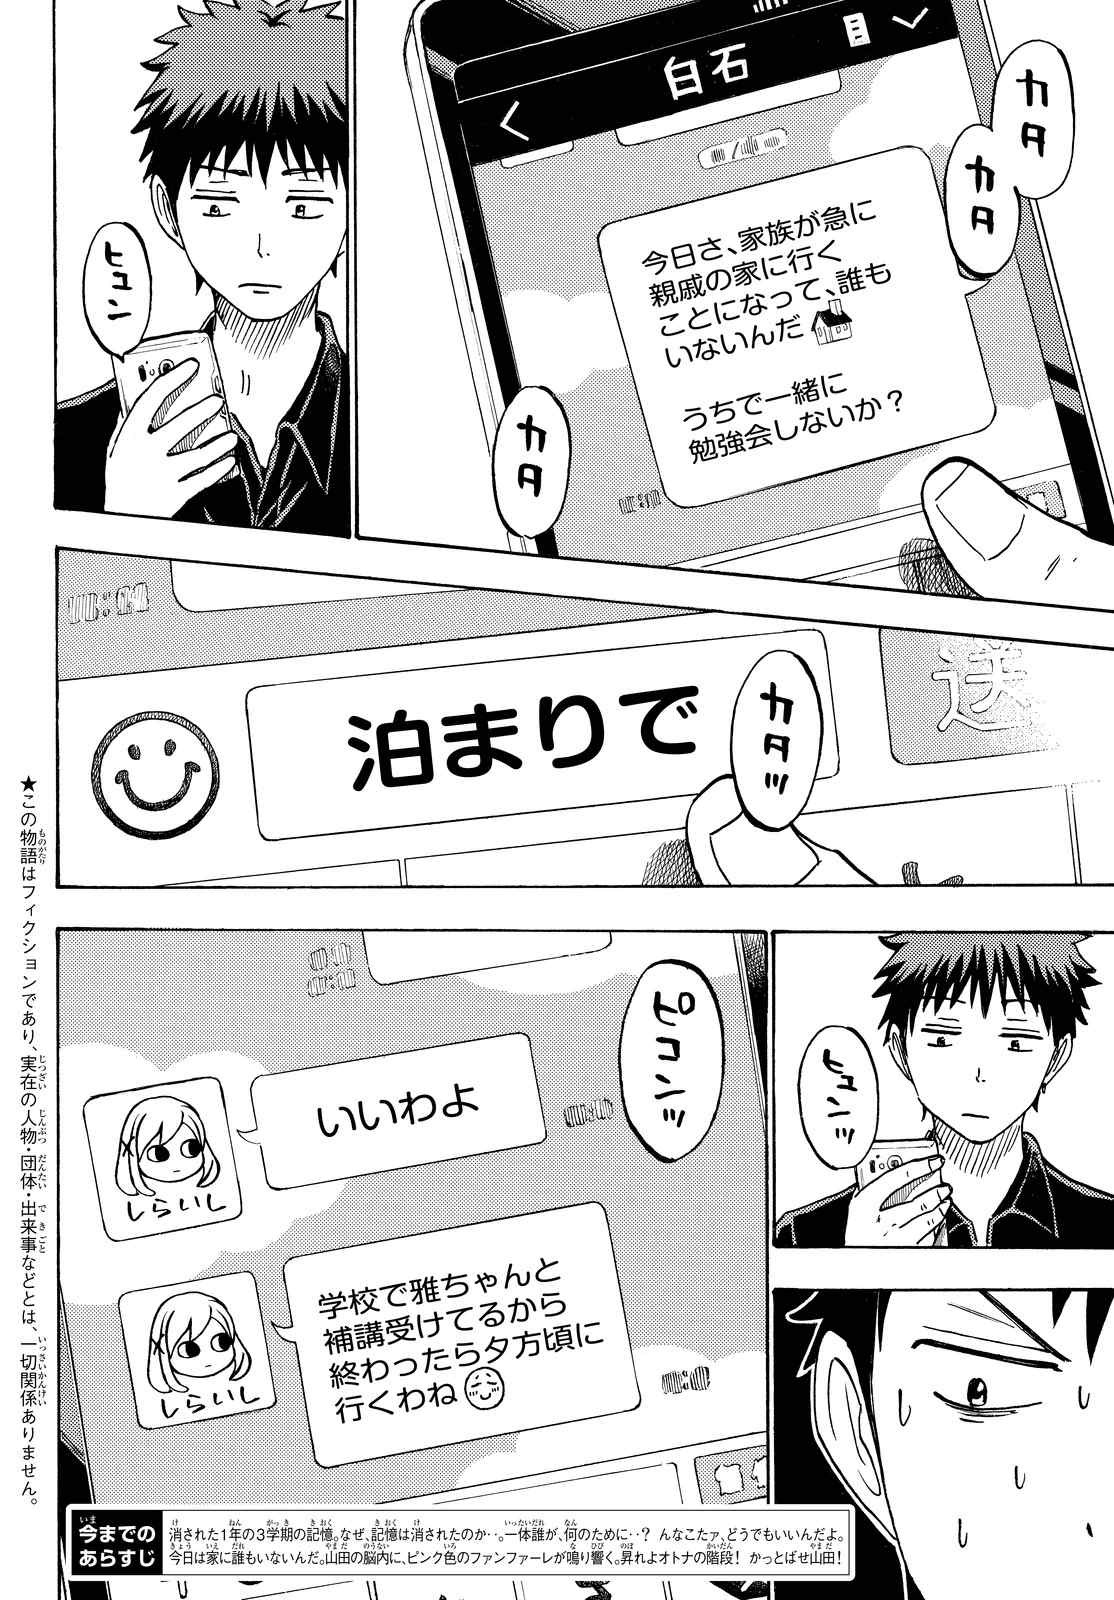 Yamada-kun to 7-nin no Majo - Chapter 217 - Page 2